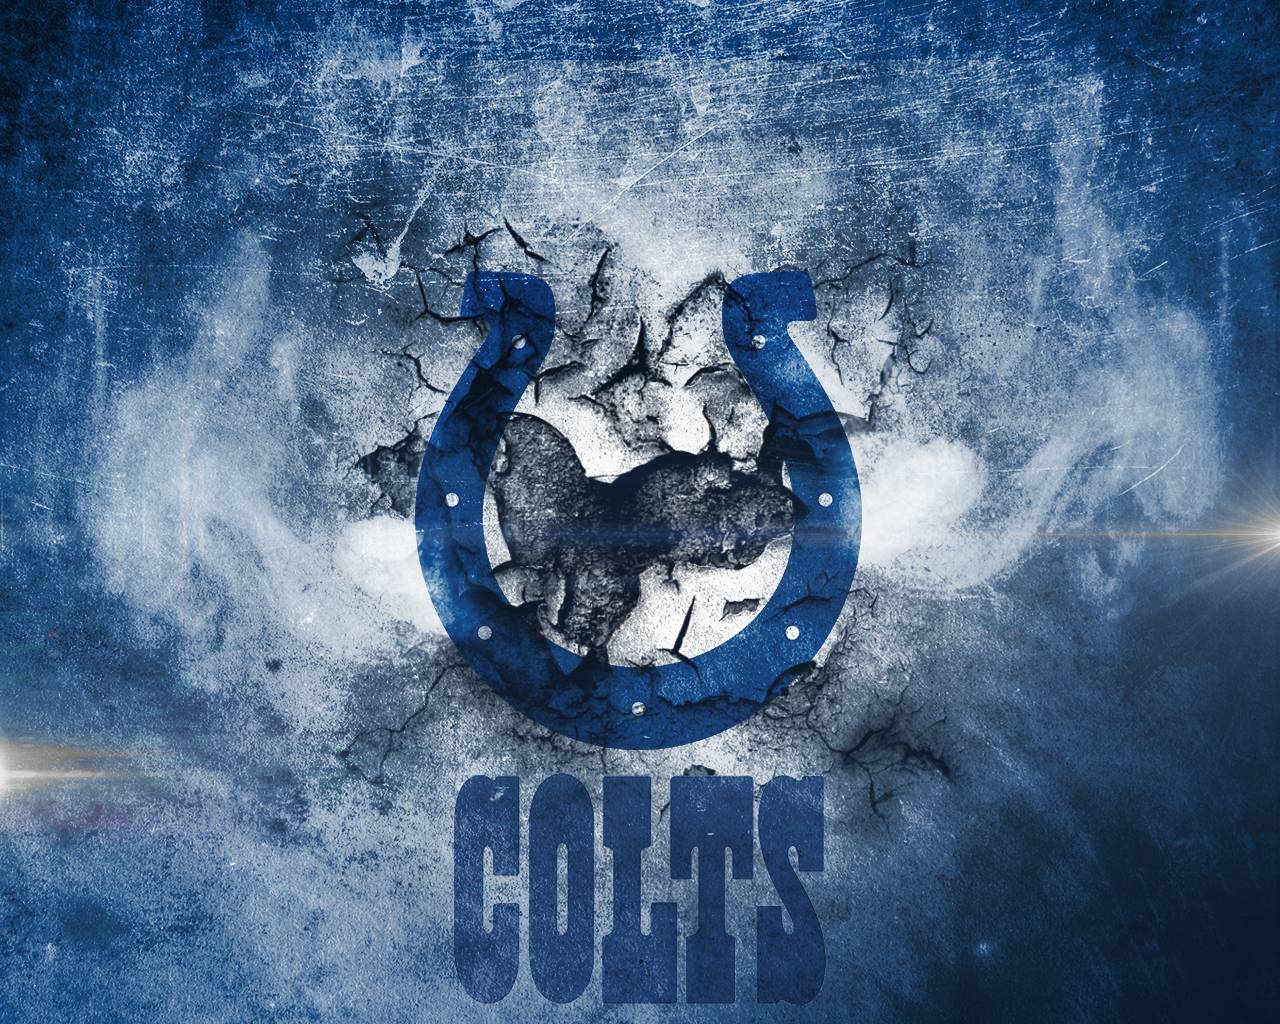 Indianapolis Colts Wallpaper 2016